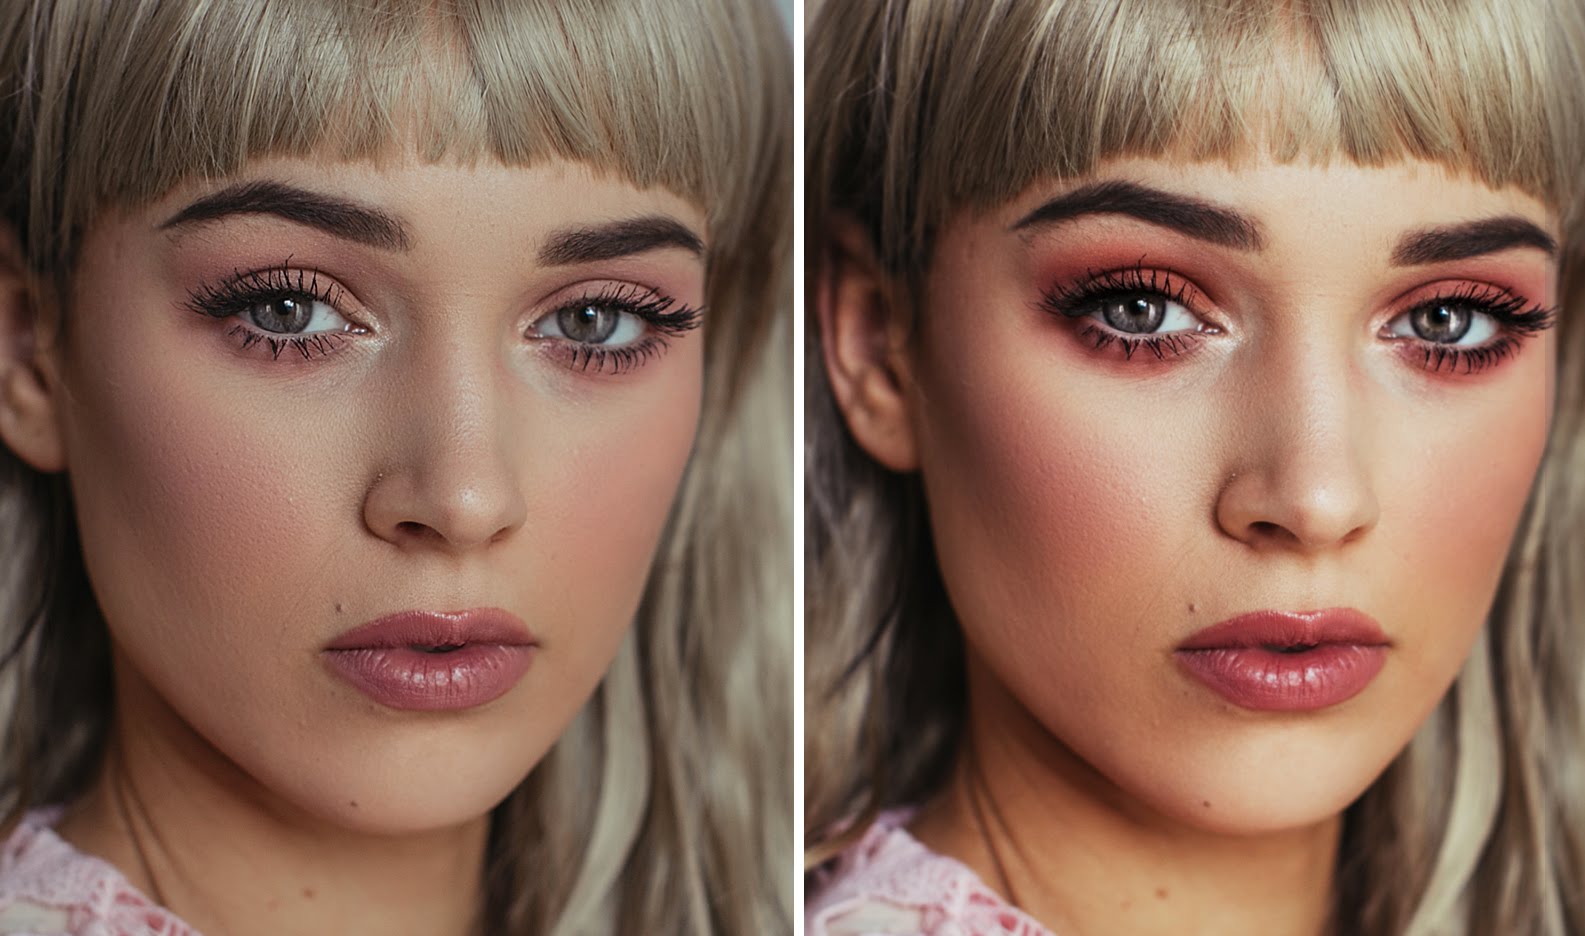 Enhance Makeup in Photoshop – Good for Makeup Artists!